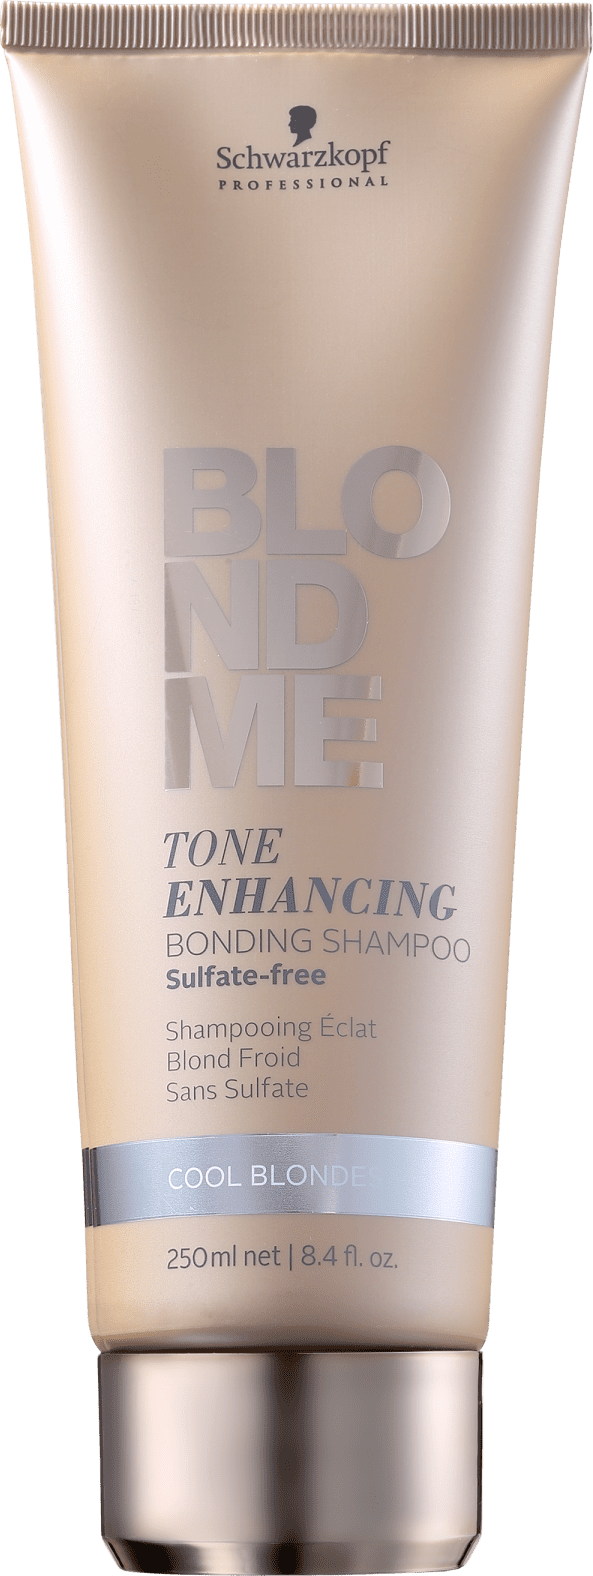 szampon loreal blond me tone enhancing